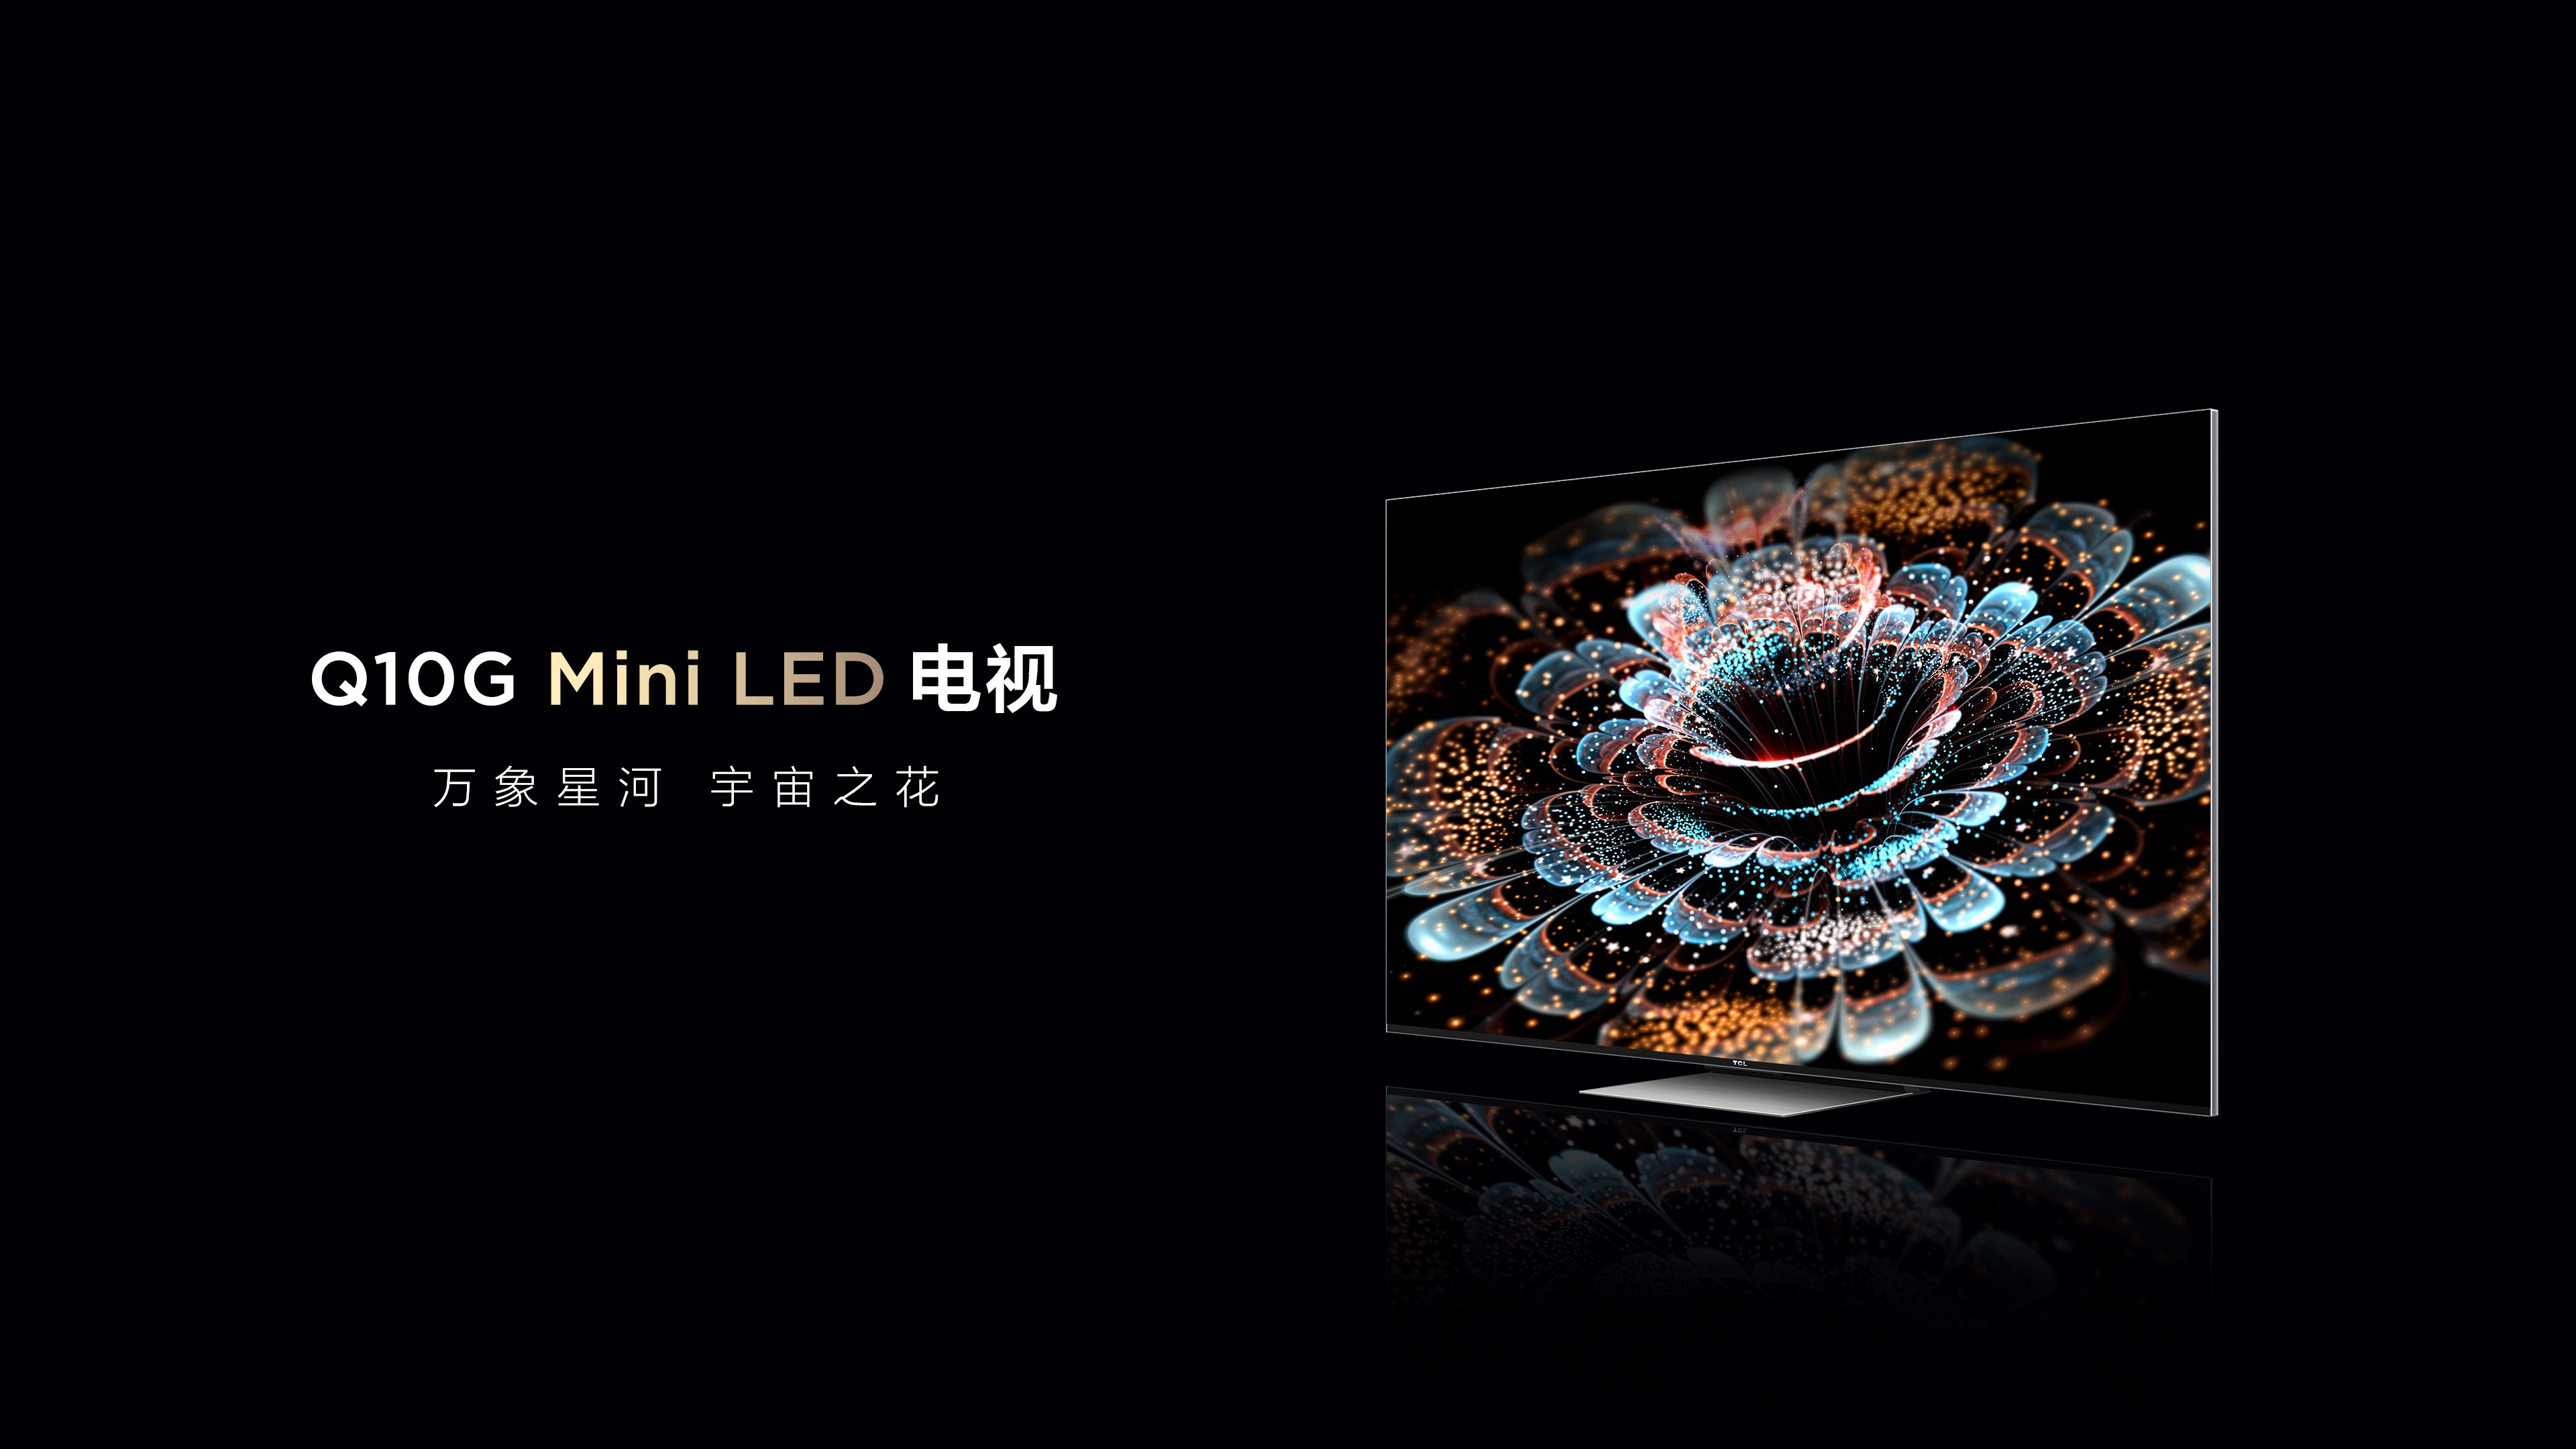 ​Q10G系列发布，TCL用“质价比”王炸成就Mini LED新里程碑
                                            原创